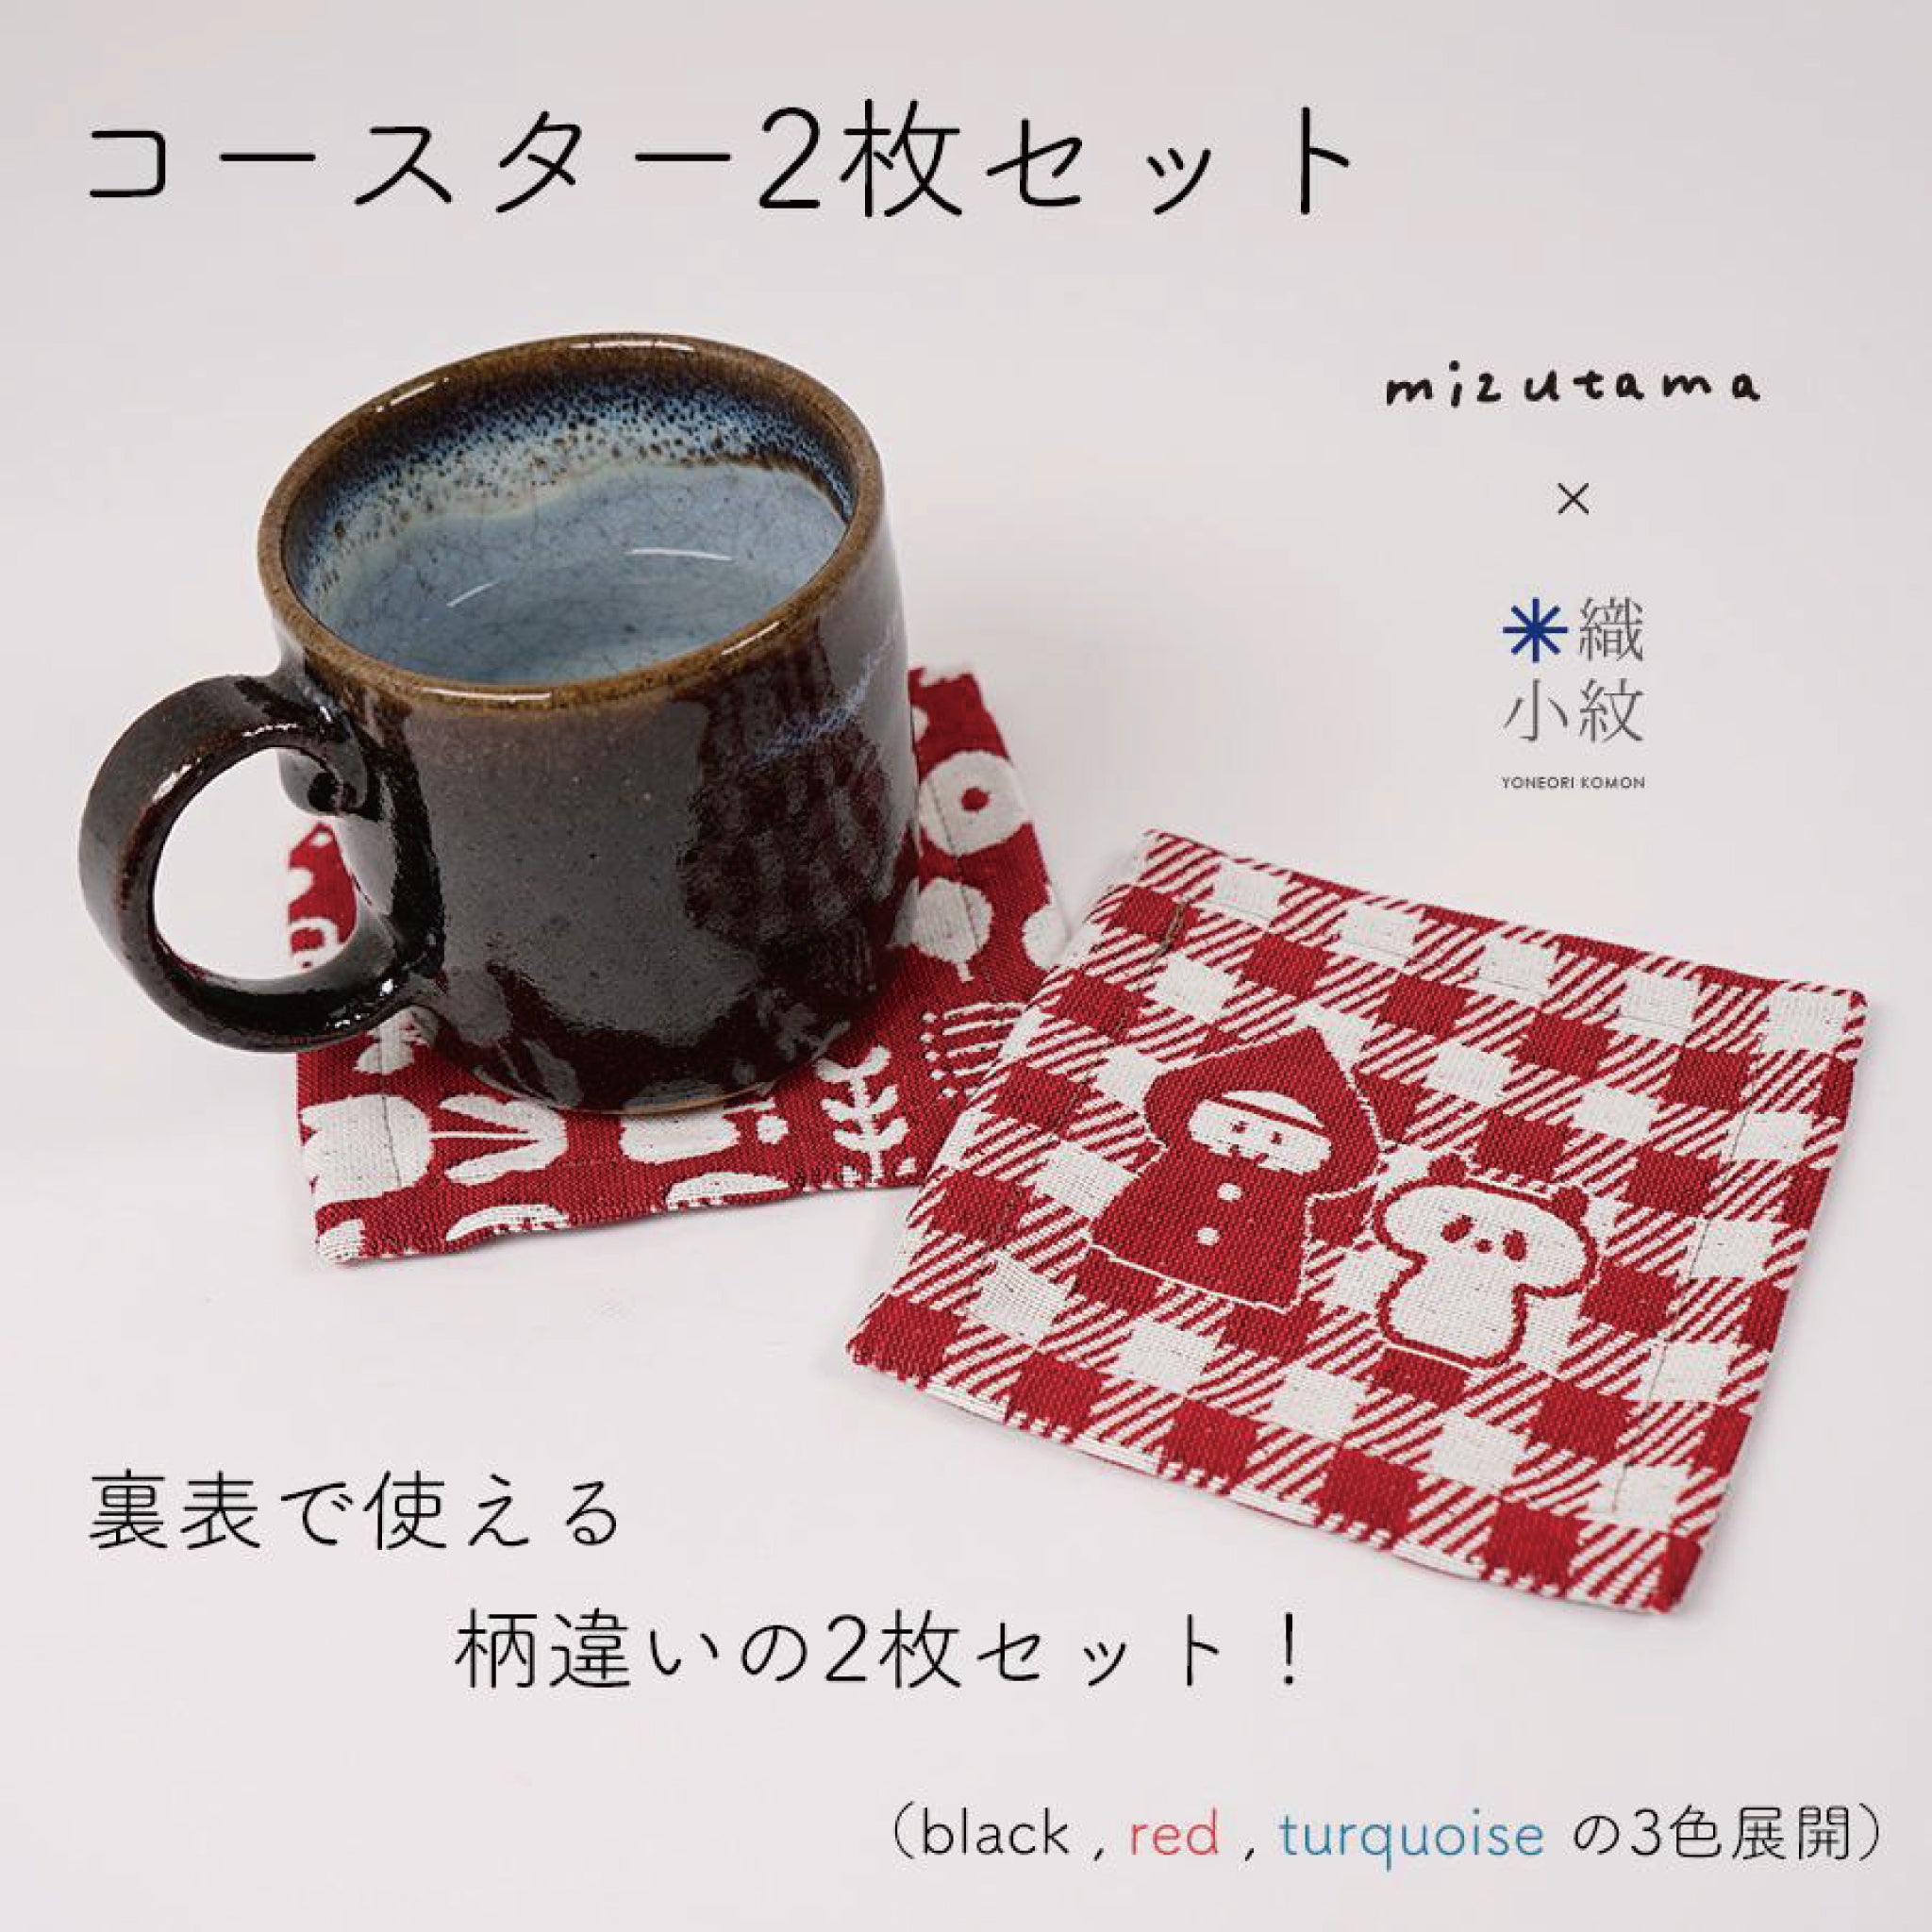 mizutama × 米織小紋 hana & check コースター 2枚セット | 八文字屋